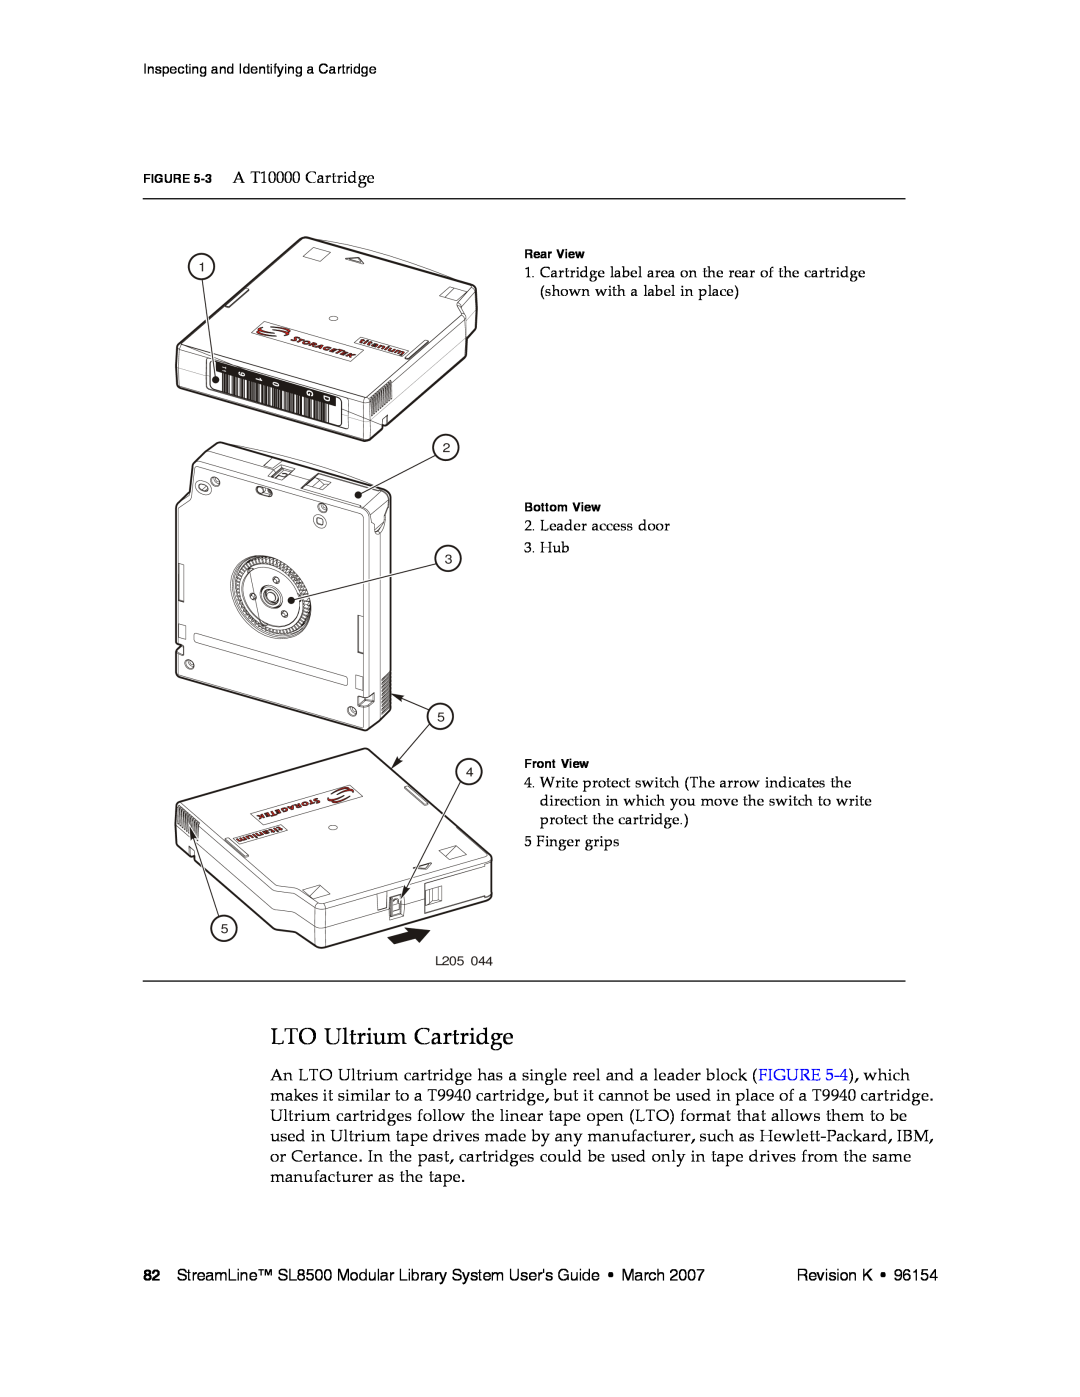 Sun Microsystems SL8500 manual LTO Ultrium Cartridge, 3 A T10000 Cartridge 